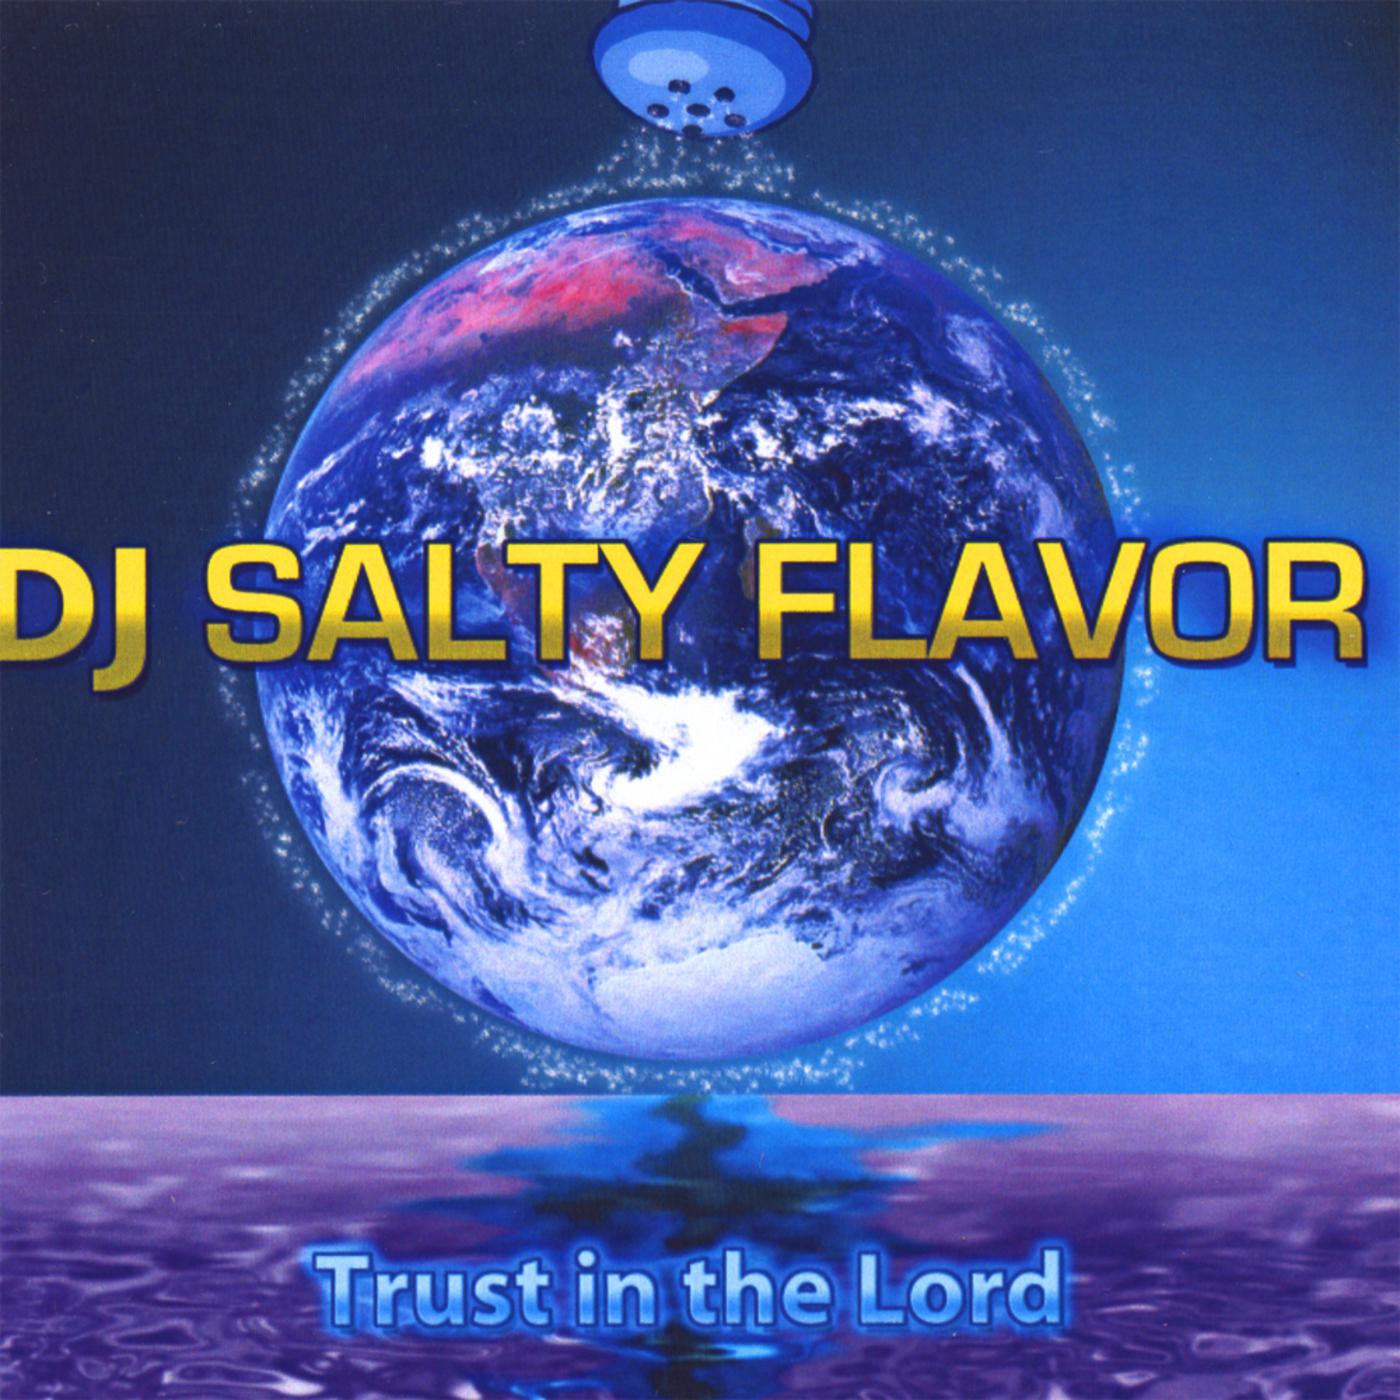 Dj Salty Flavor - Deep Inside (Hundred Year Remix)